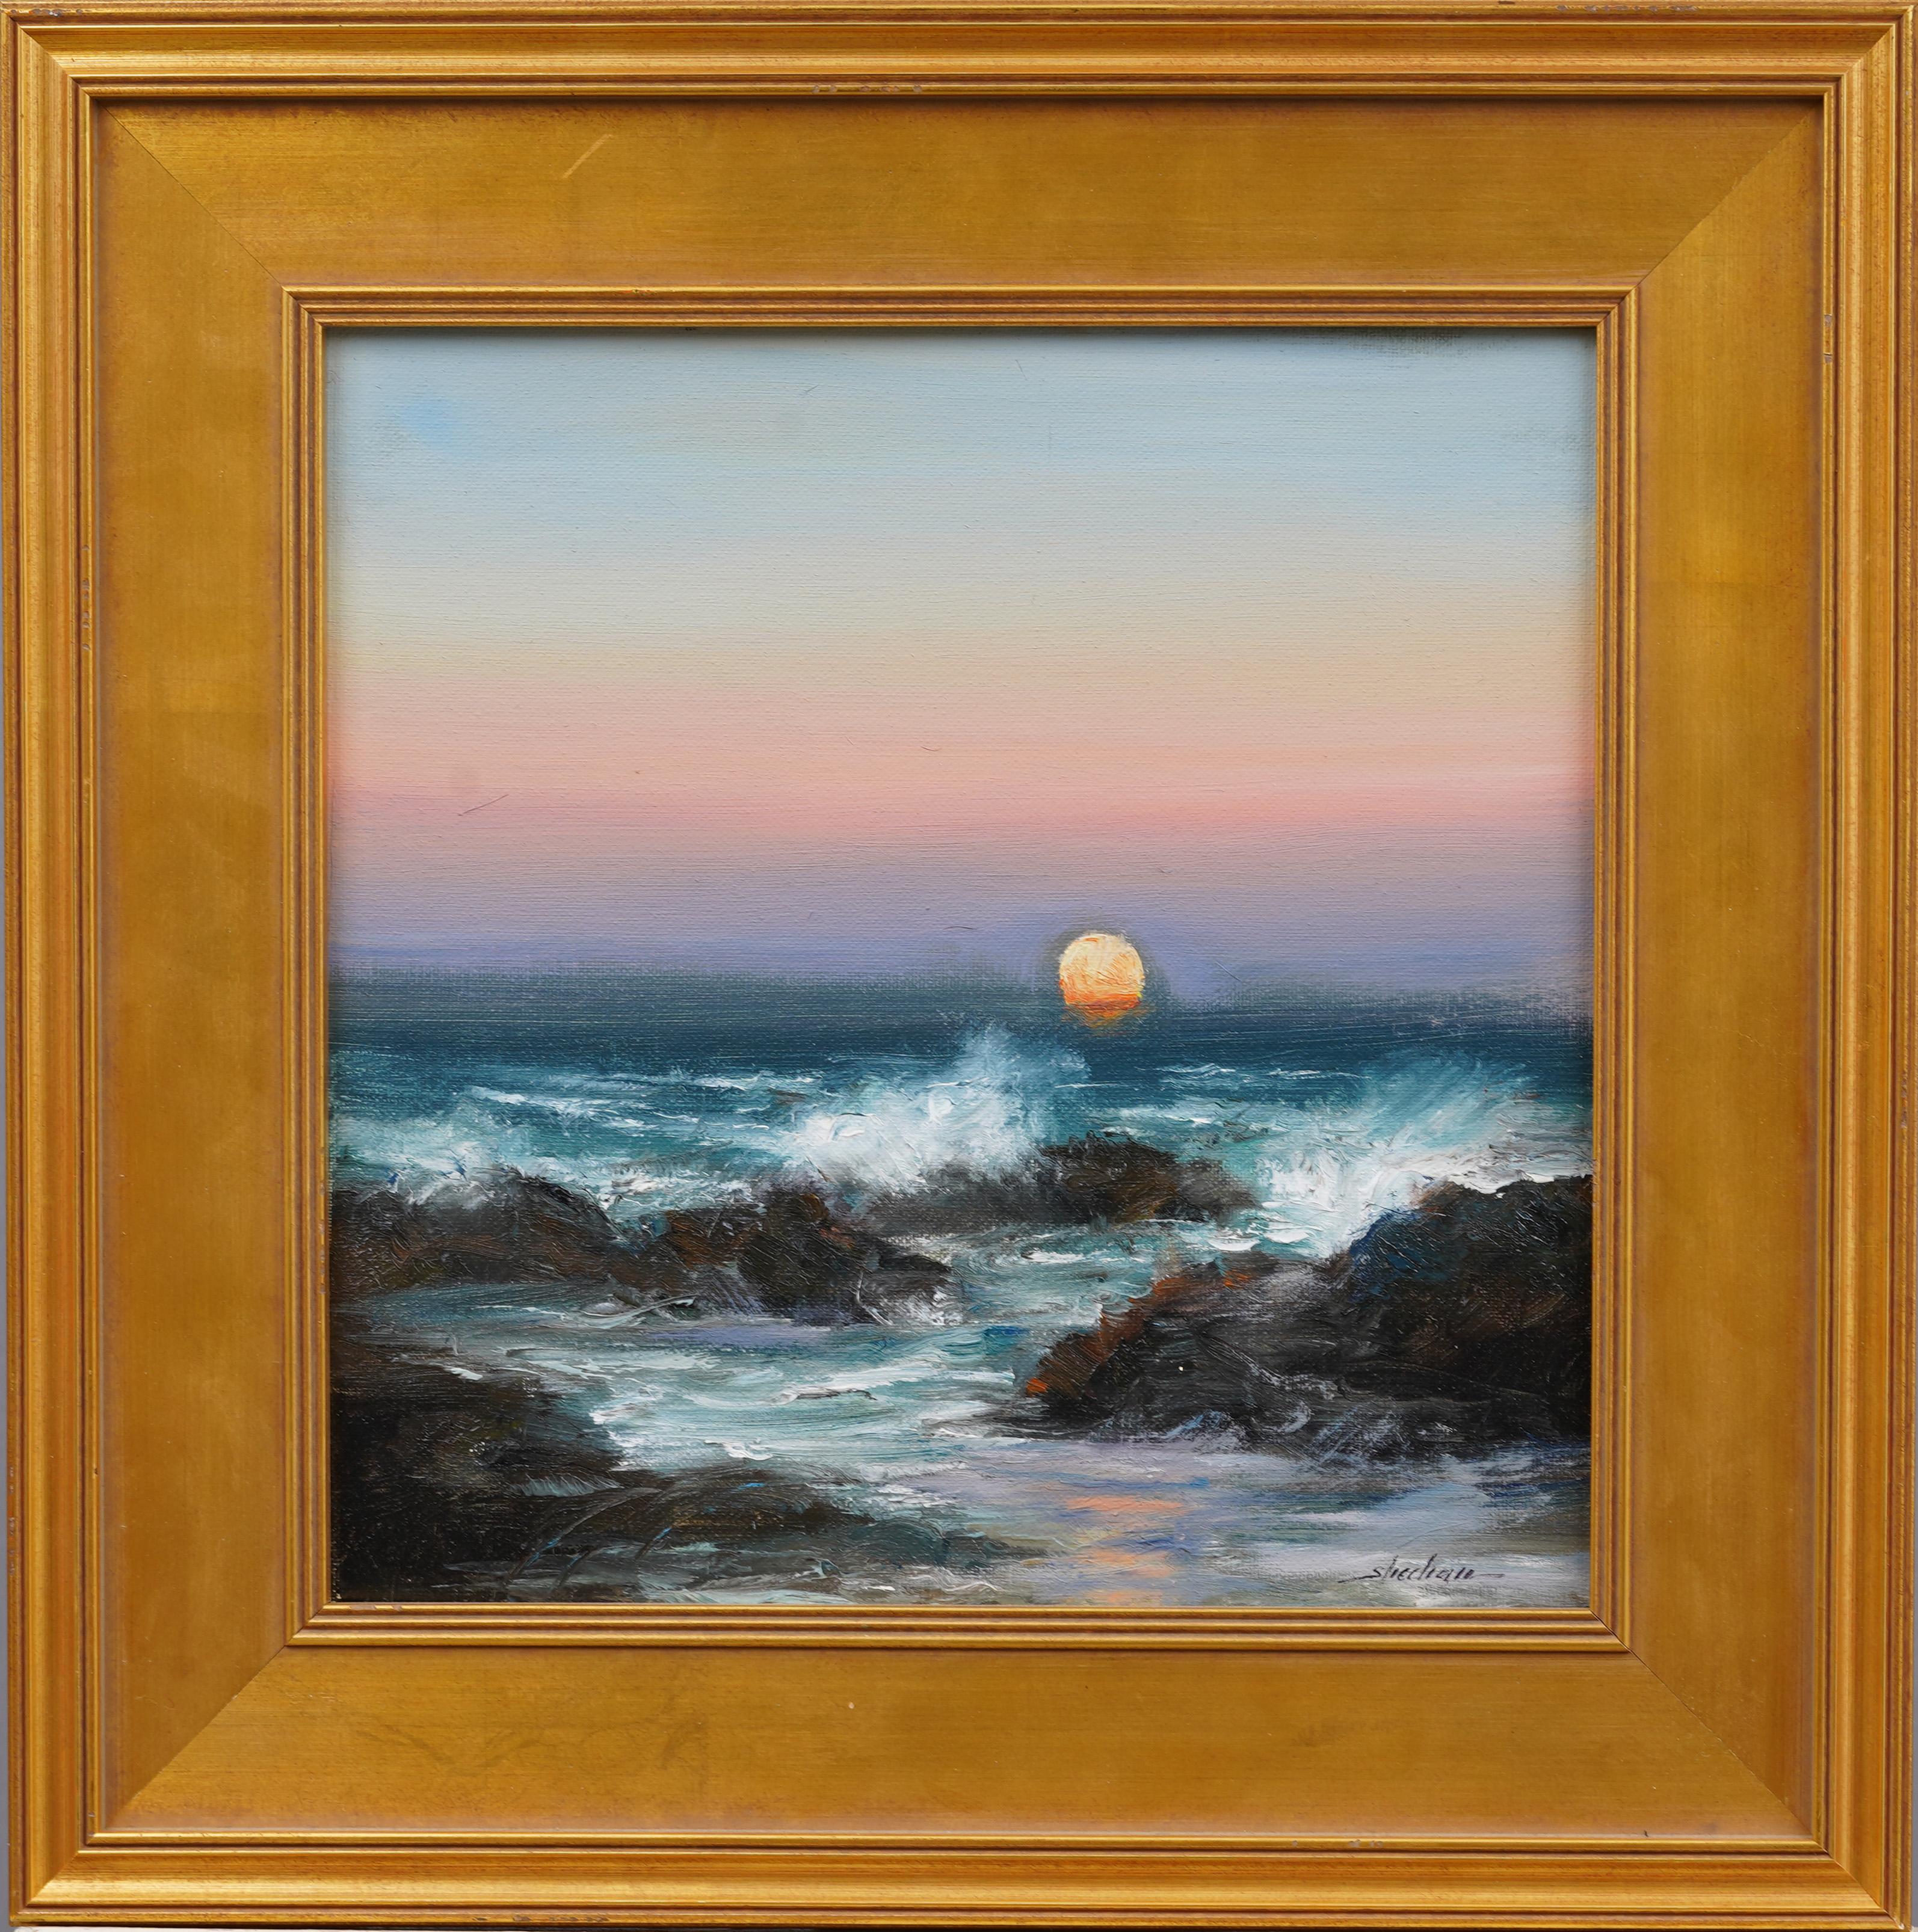 Dennis Sheehan Landscape Painting - "Surf Spray" American Impressionist New England Coastal Sunset Seascape Painting